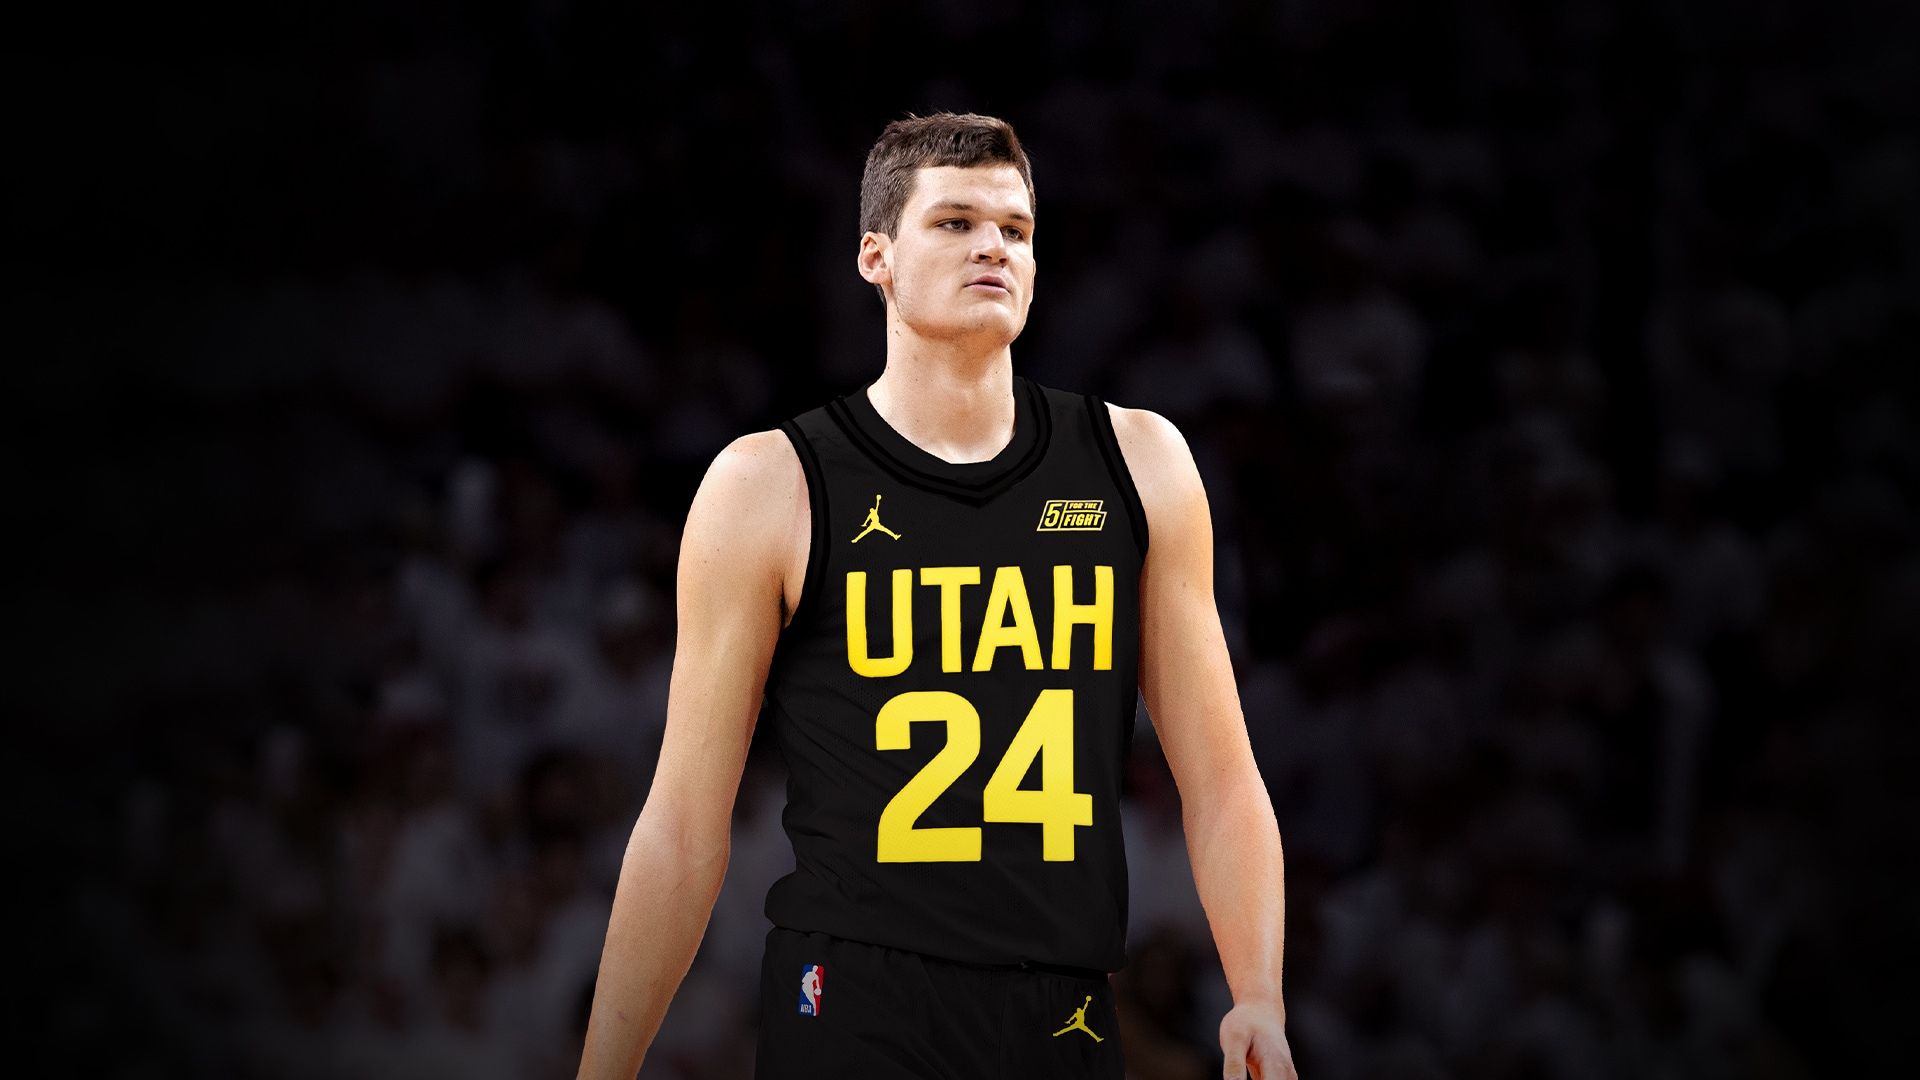 Utah Jazz celebrate 50th season with throwback uniform, new court design